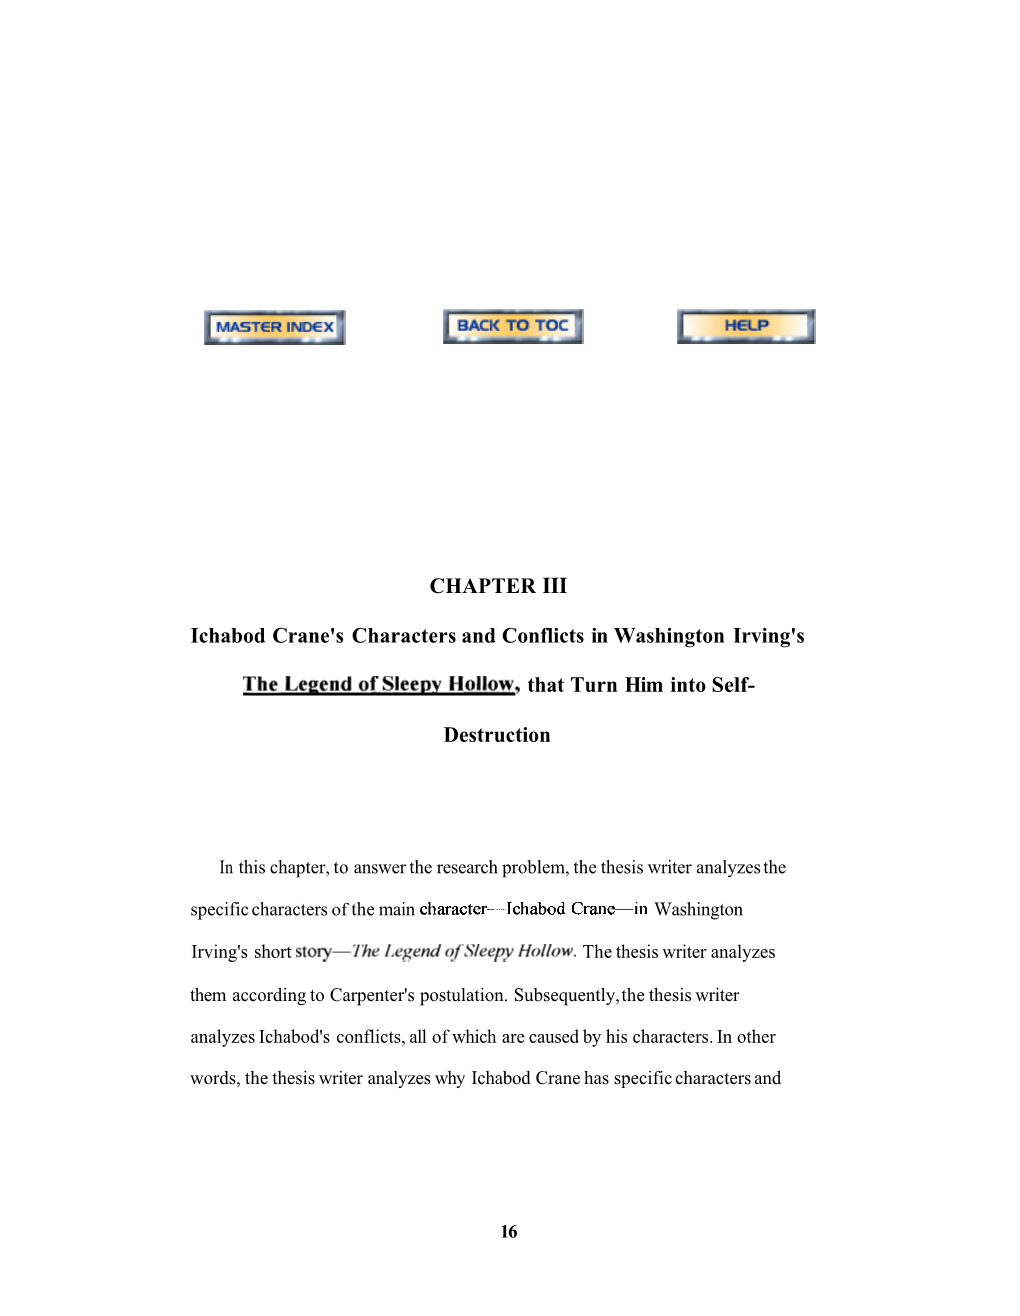 An Analysis of Ichabod Crane's Self-Destruction in Washington